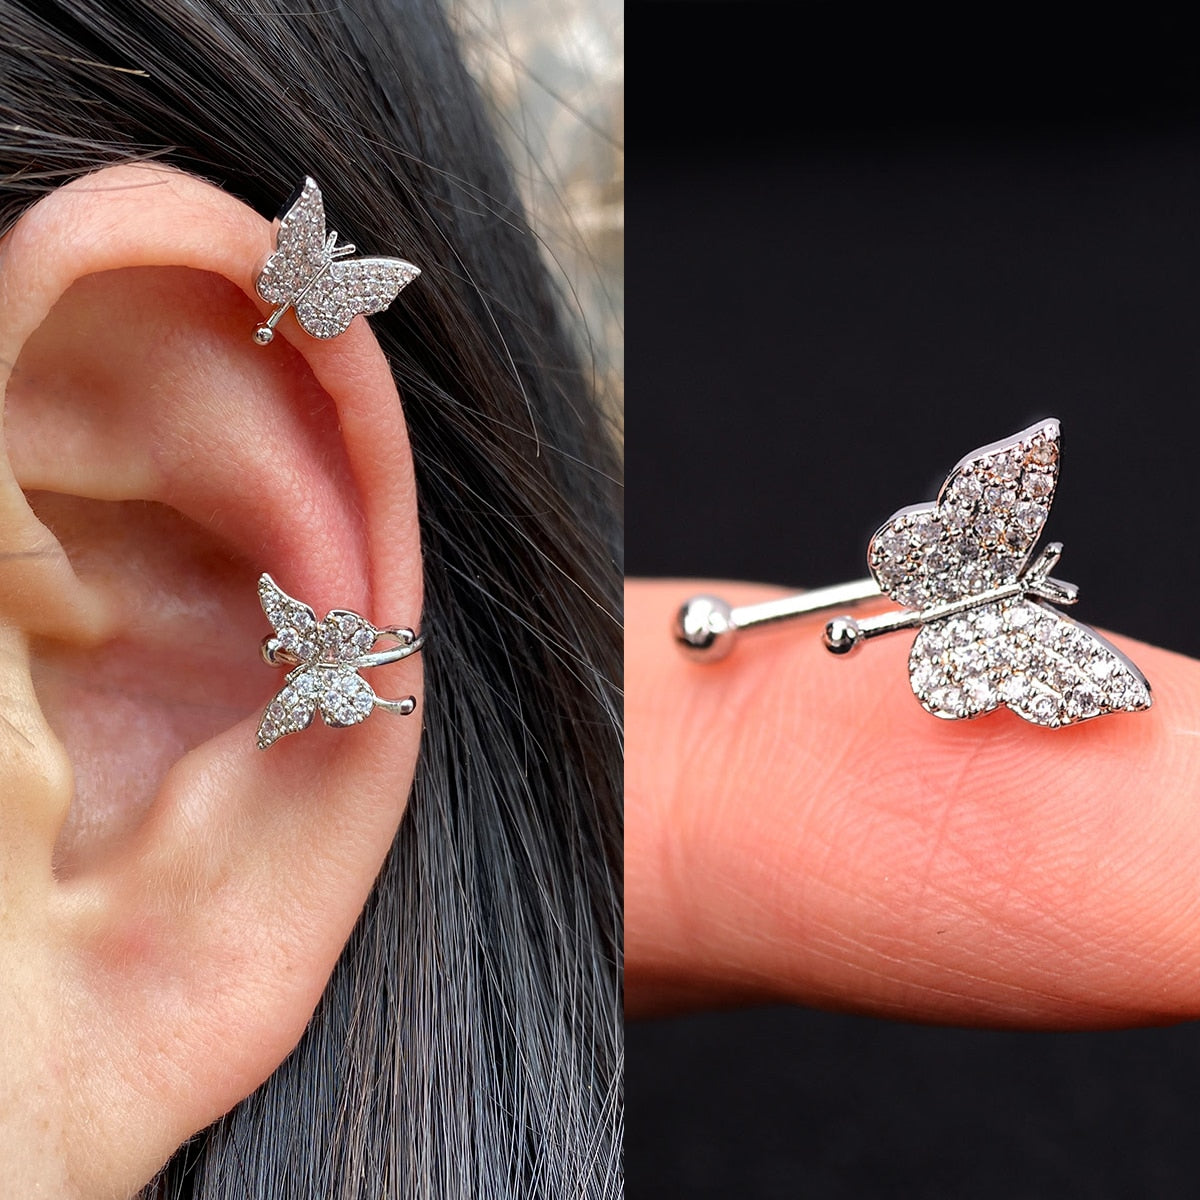 1Pcs Hot Sale Cute Metal Leaf Earcuff Clips On Earring for Women Girls No Fake Piercing Cartilage Earrings Ear Ring Without Hole